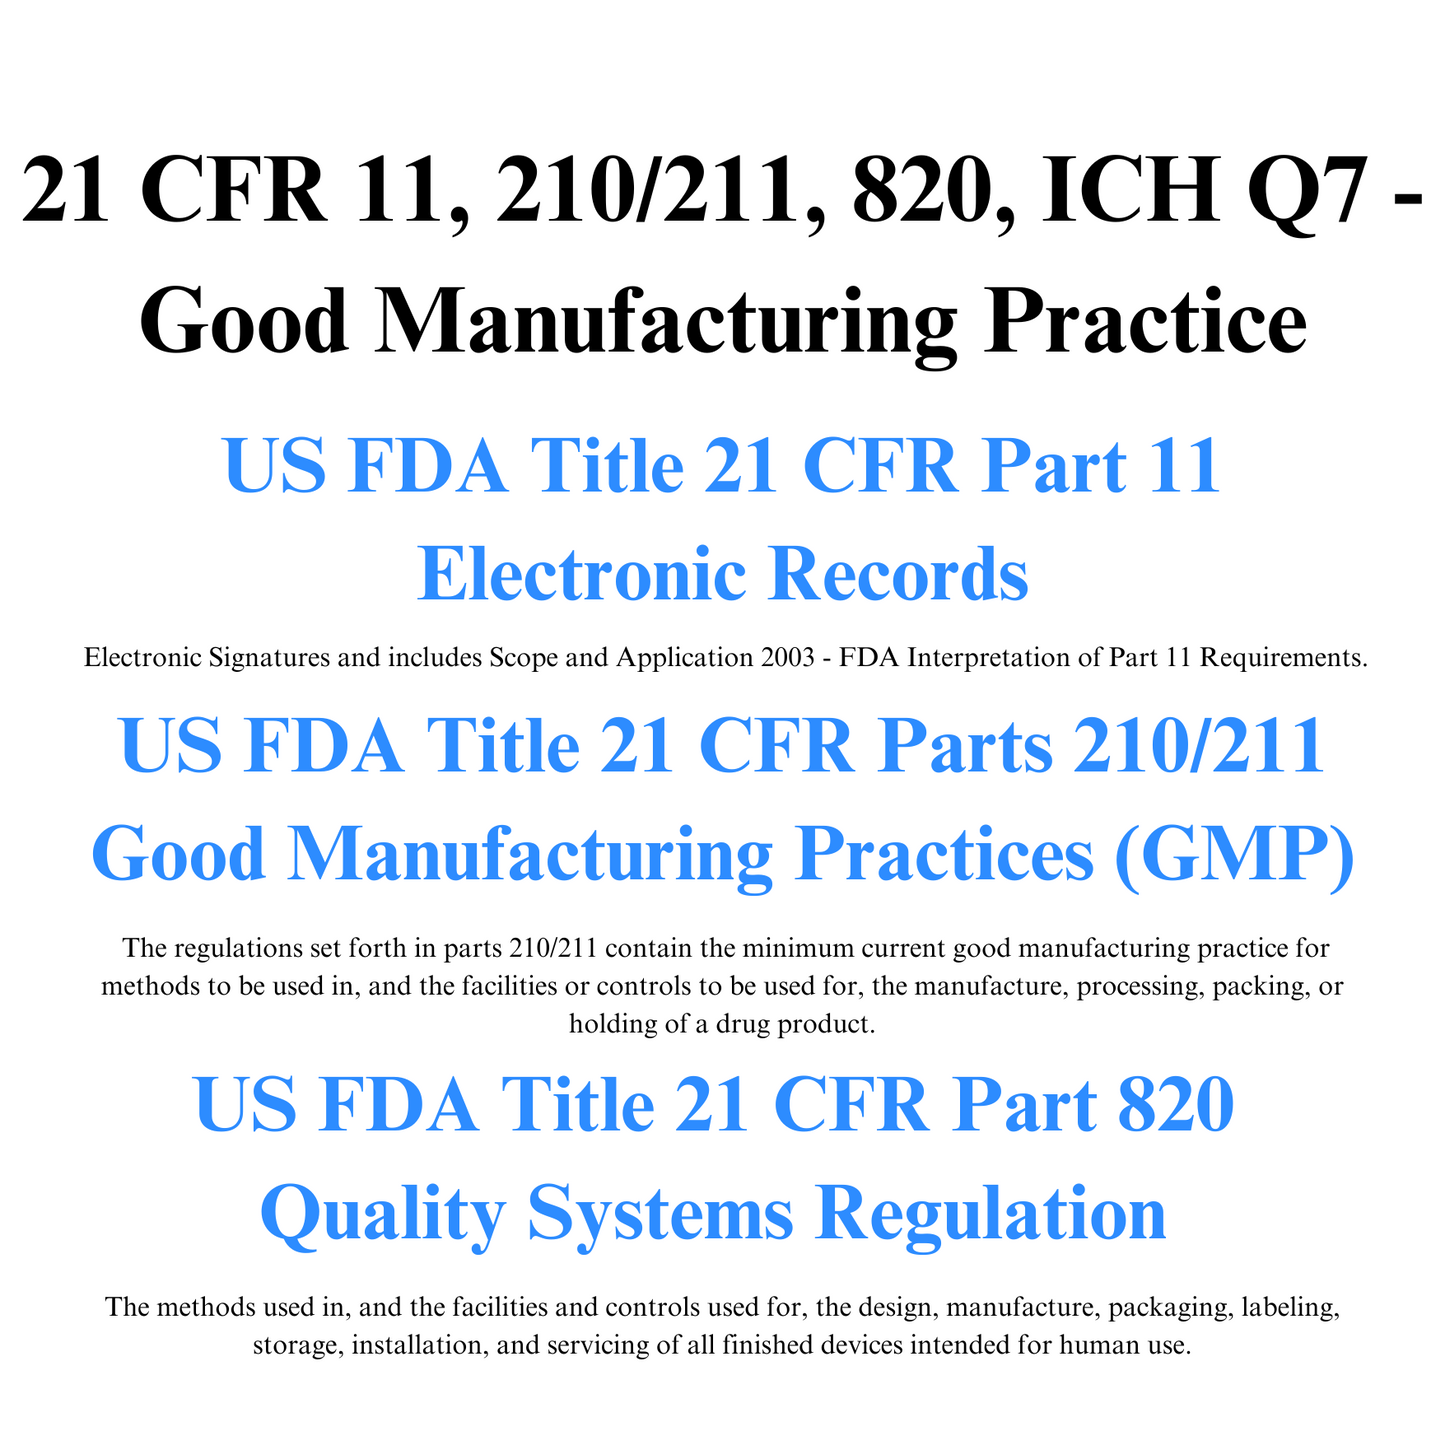 Manufacturing Site - Standard Operating Procedures (SOPs)